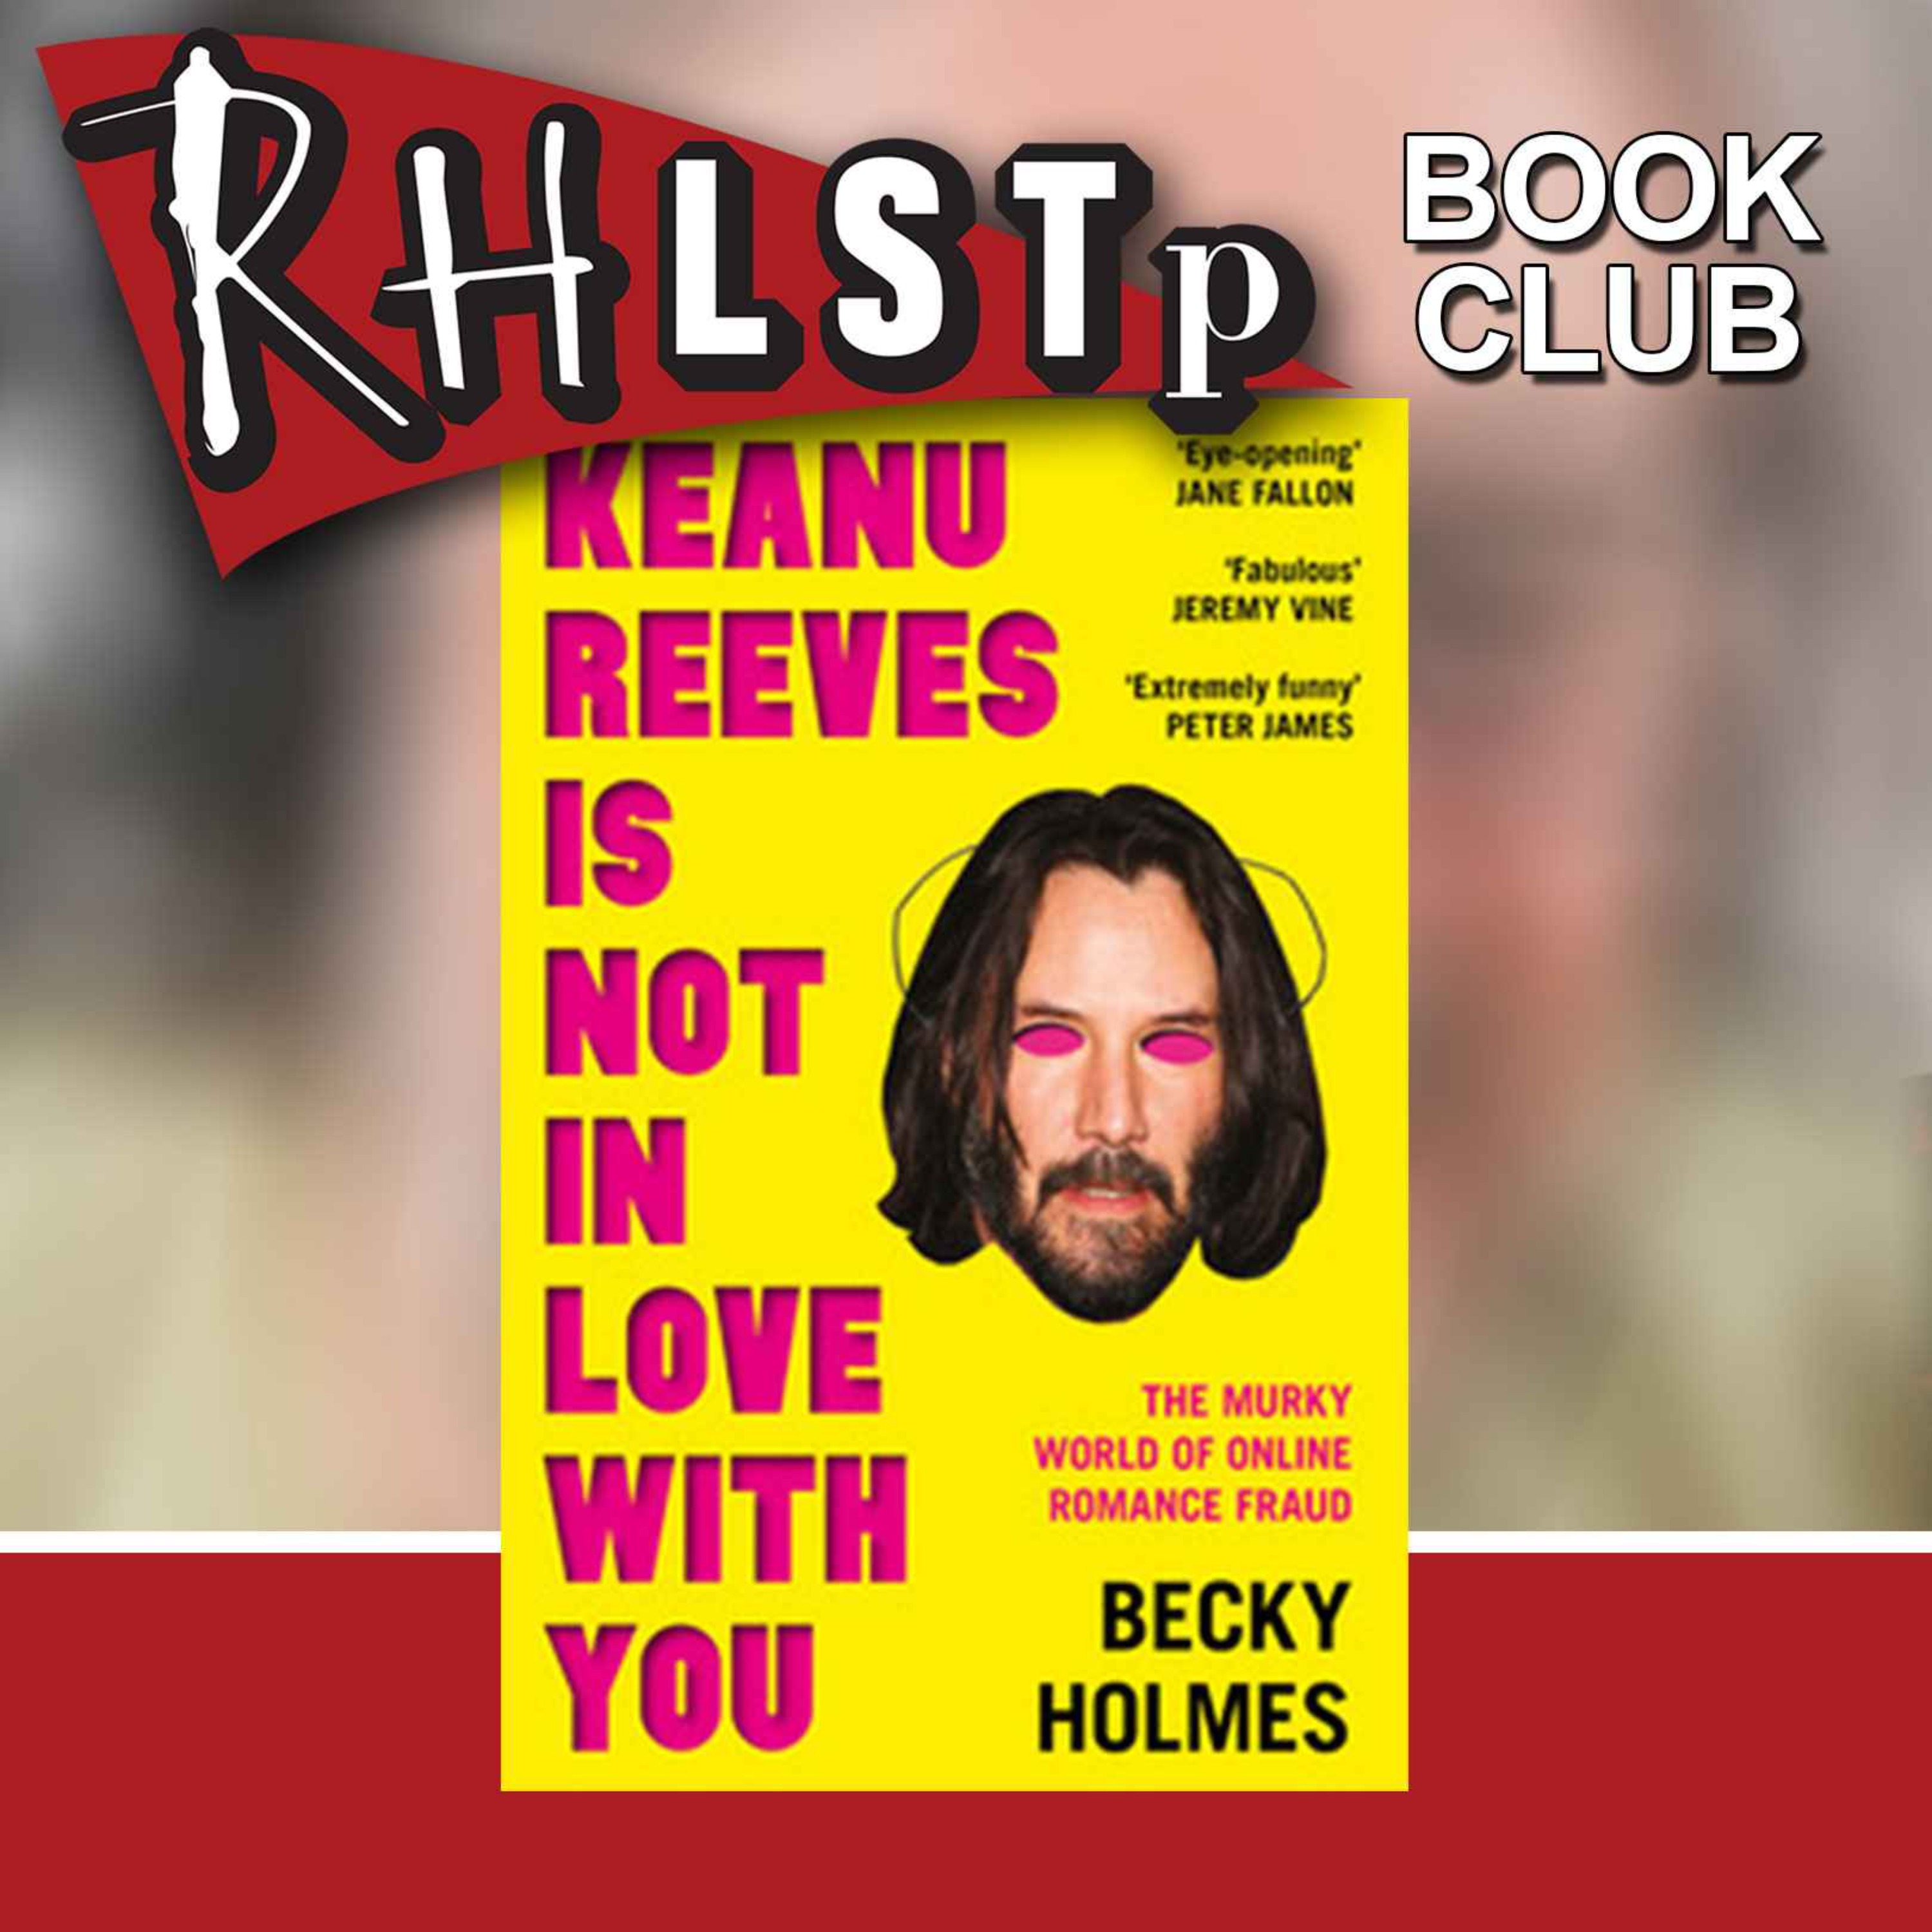 RHLSTP Book Club 83 - Becky Holmes